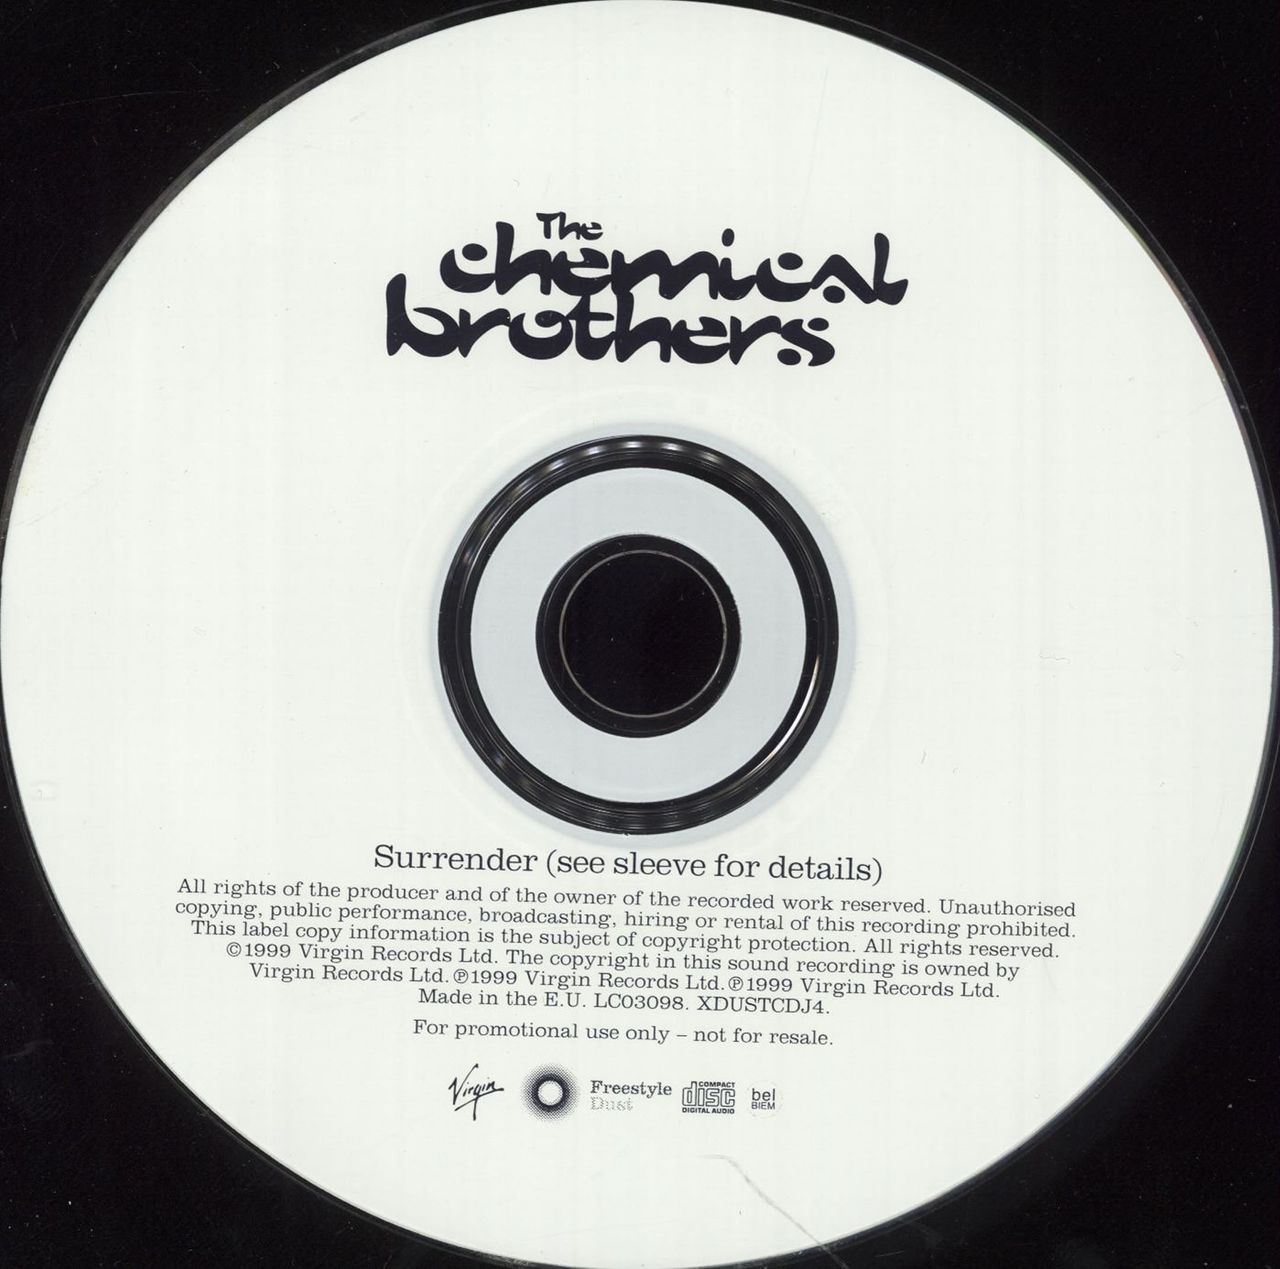 Chemical Brothers Surrender UK Promo CD album — RareVinyl.com